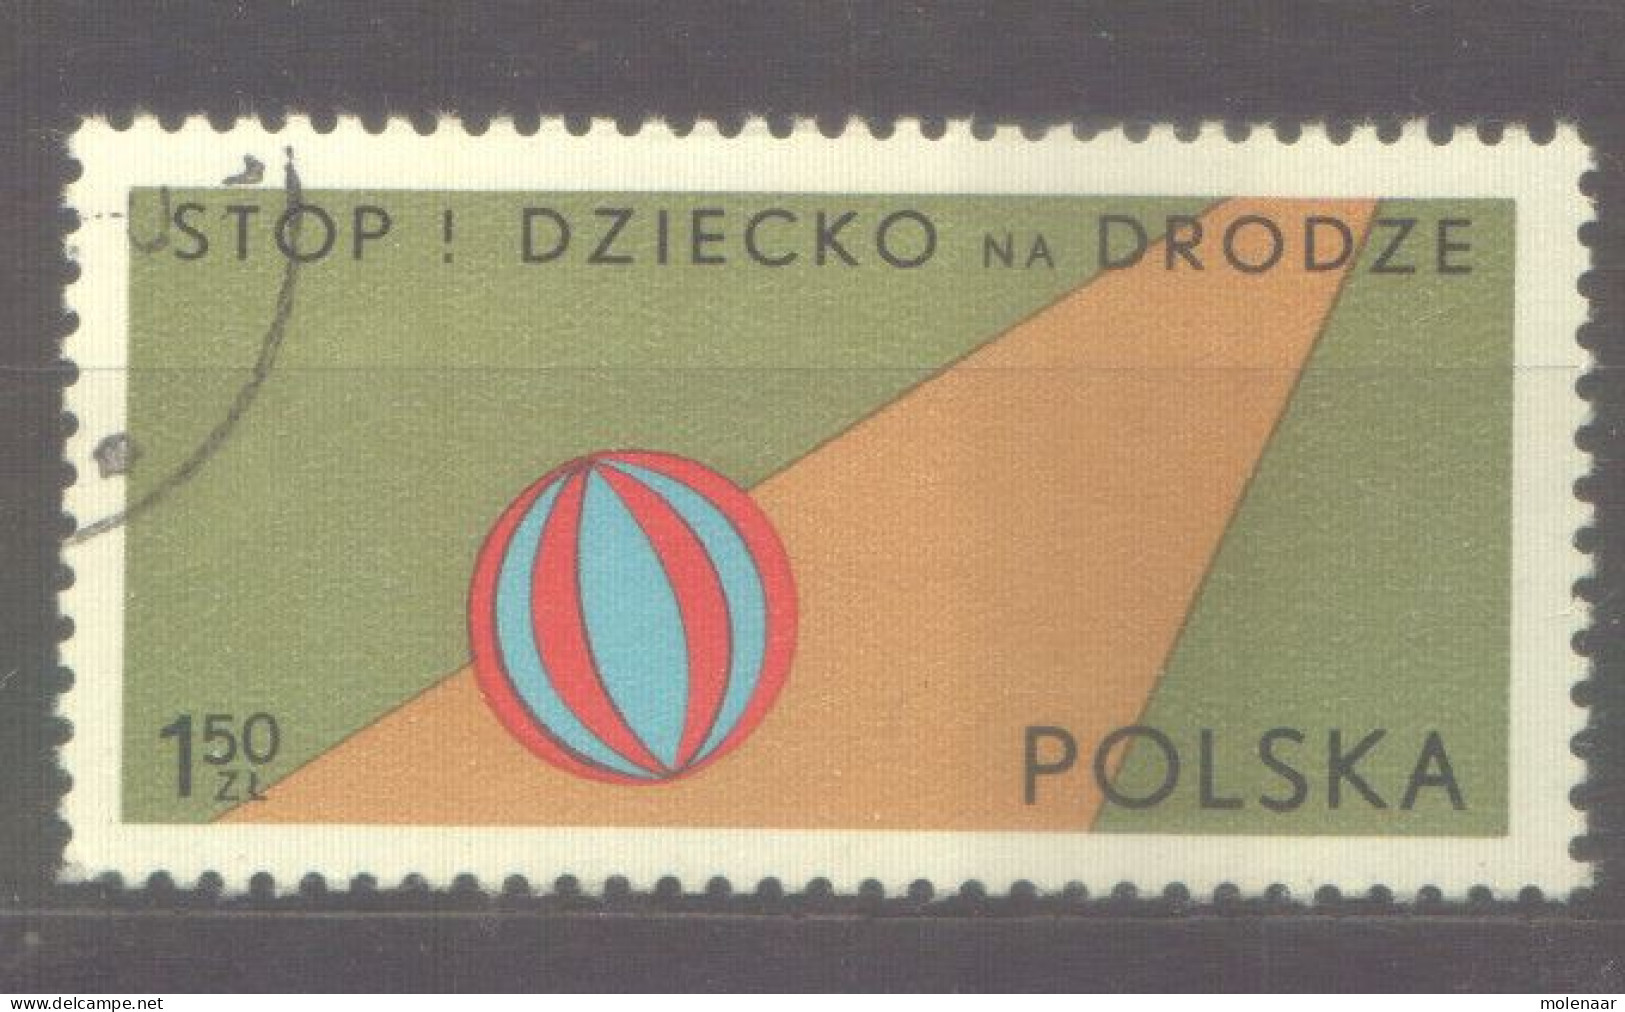 Postzegels > Europa > Polen > 1944-.... Republiek > 1971-80 > Gebruikt No. 2483 (24139) - Gebraucht